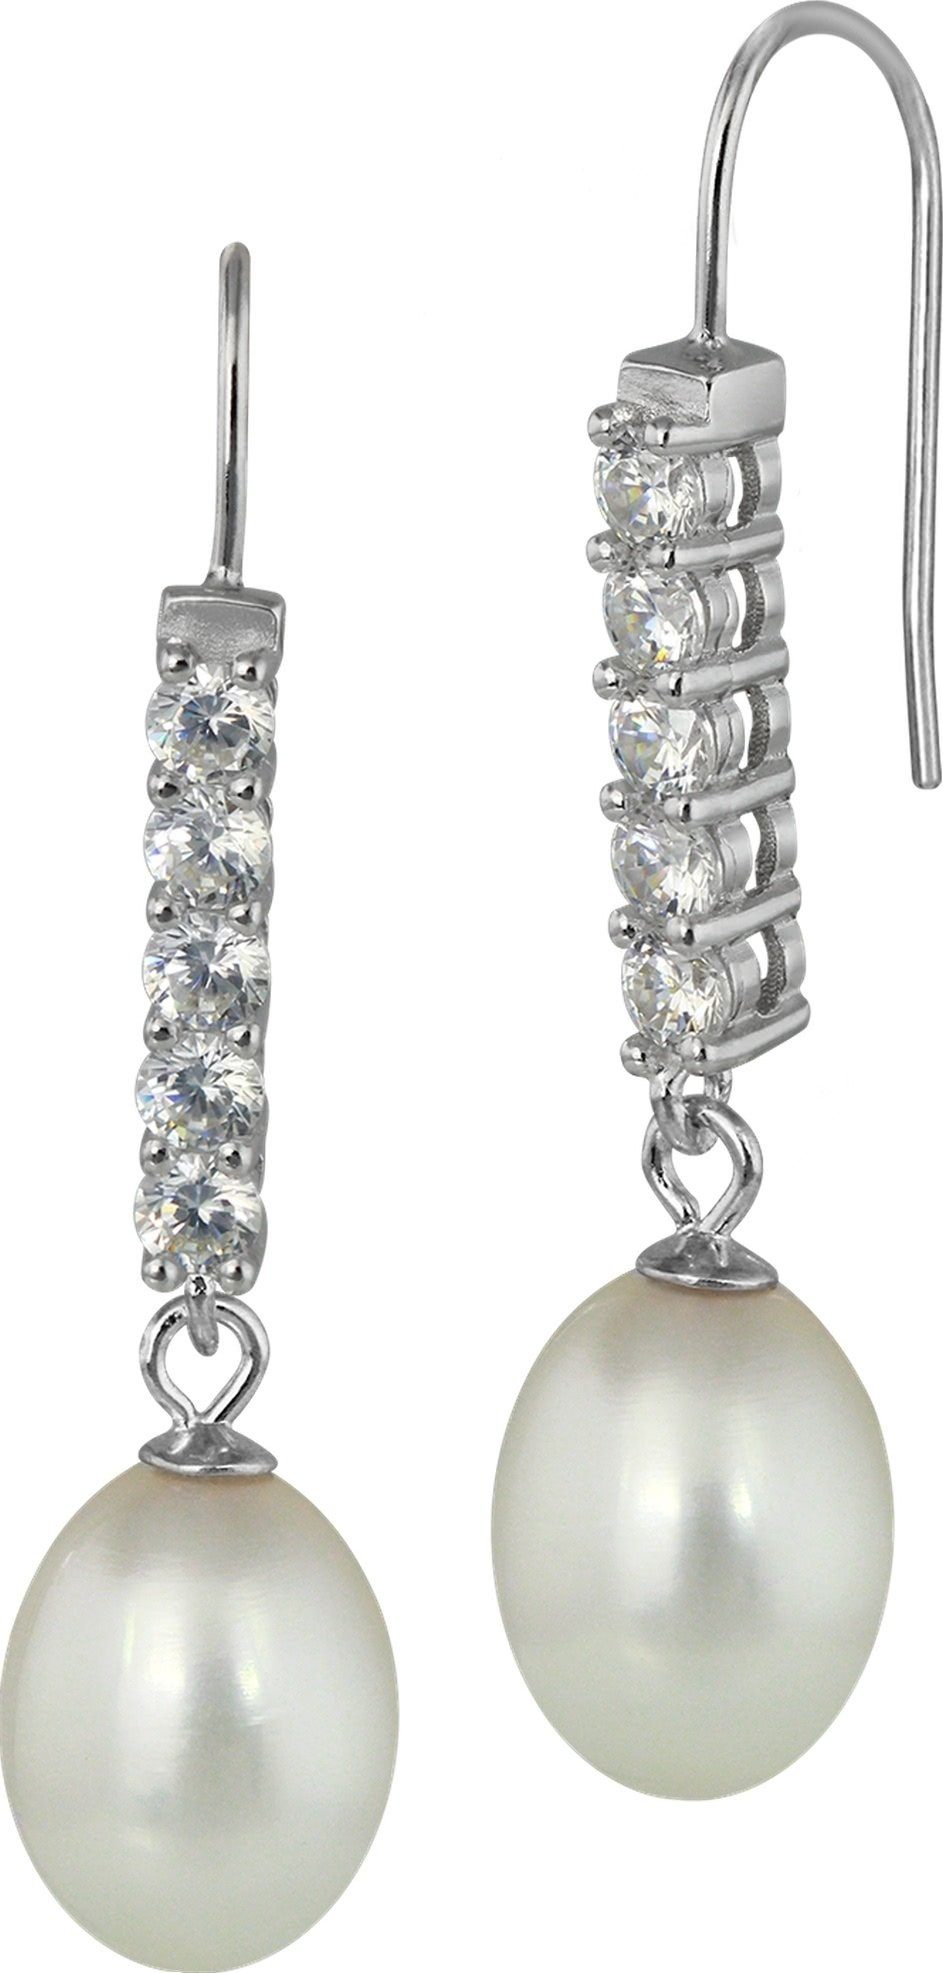 SilberDream Paar Ohrhänger SilberDream Ohrringe Damen Silber (Ohrhänger), Hakenverschluss Verschluß Ohrhänger aus 925 Sterling Silber